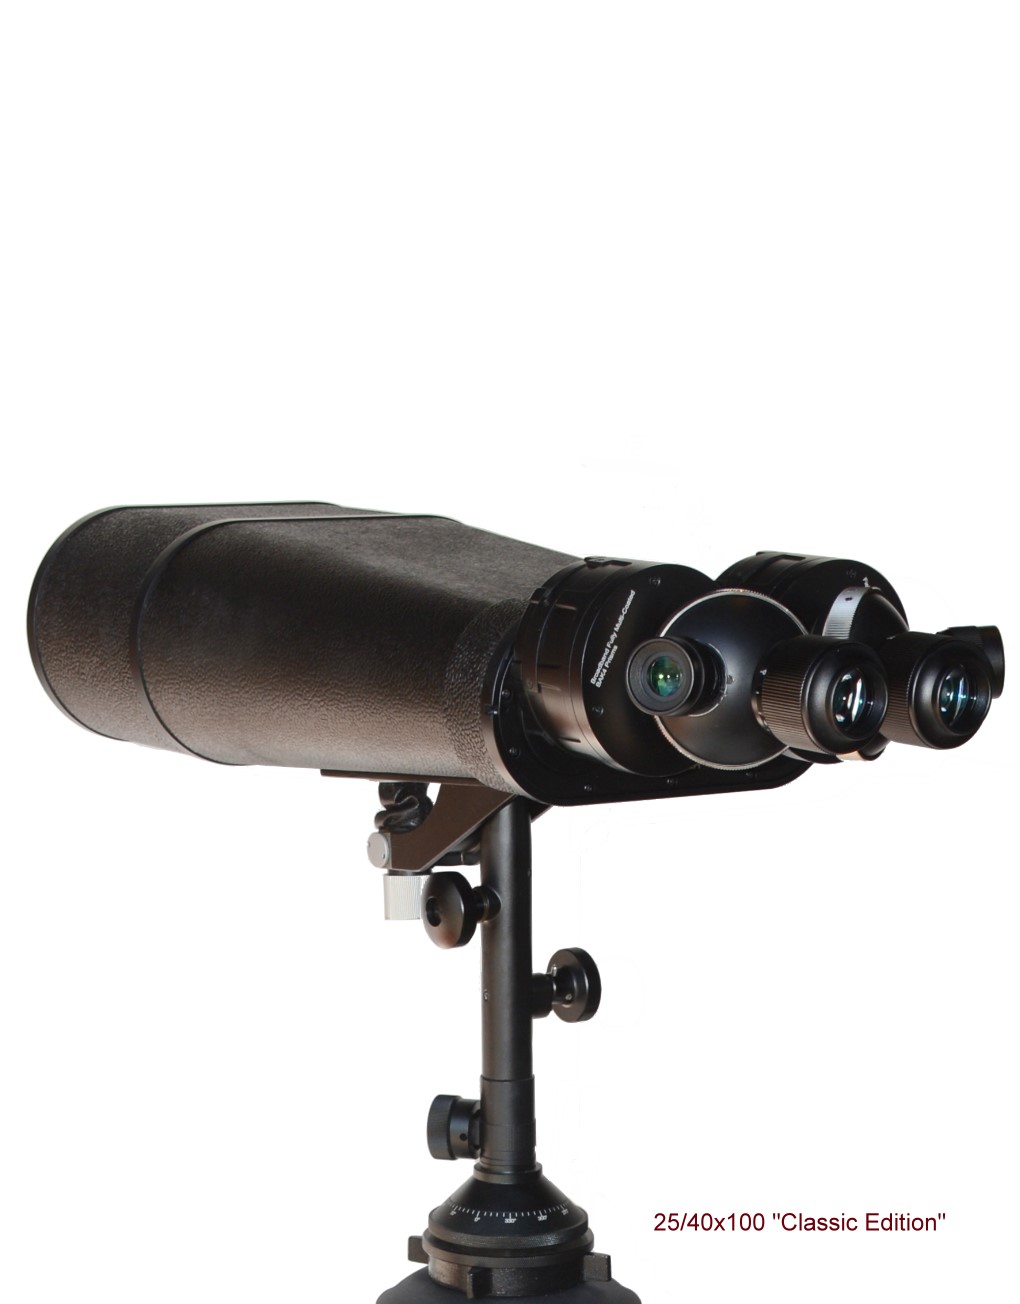 observation of binoculars